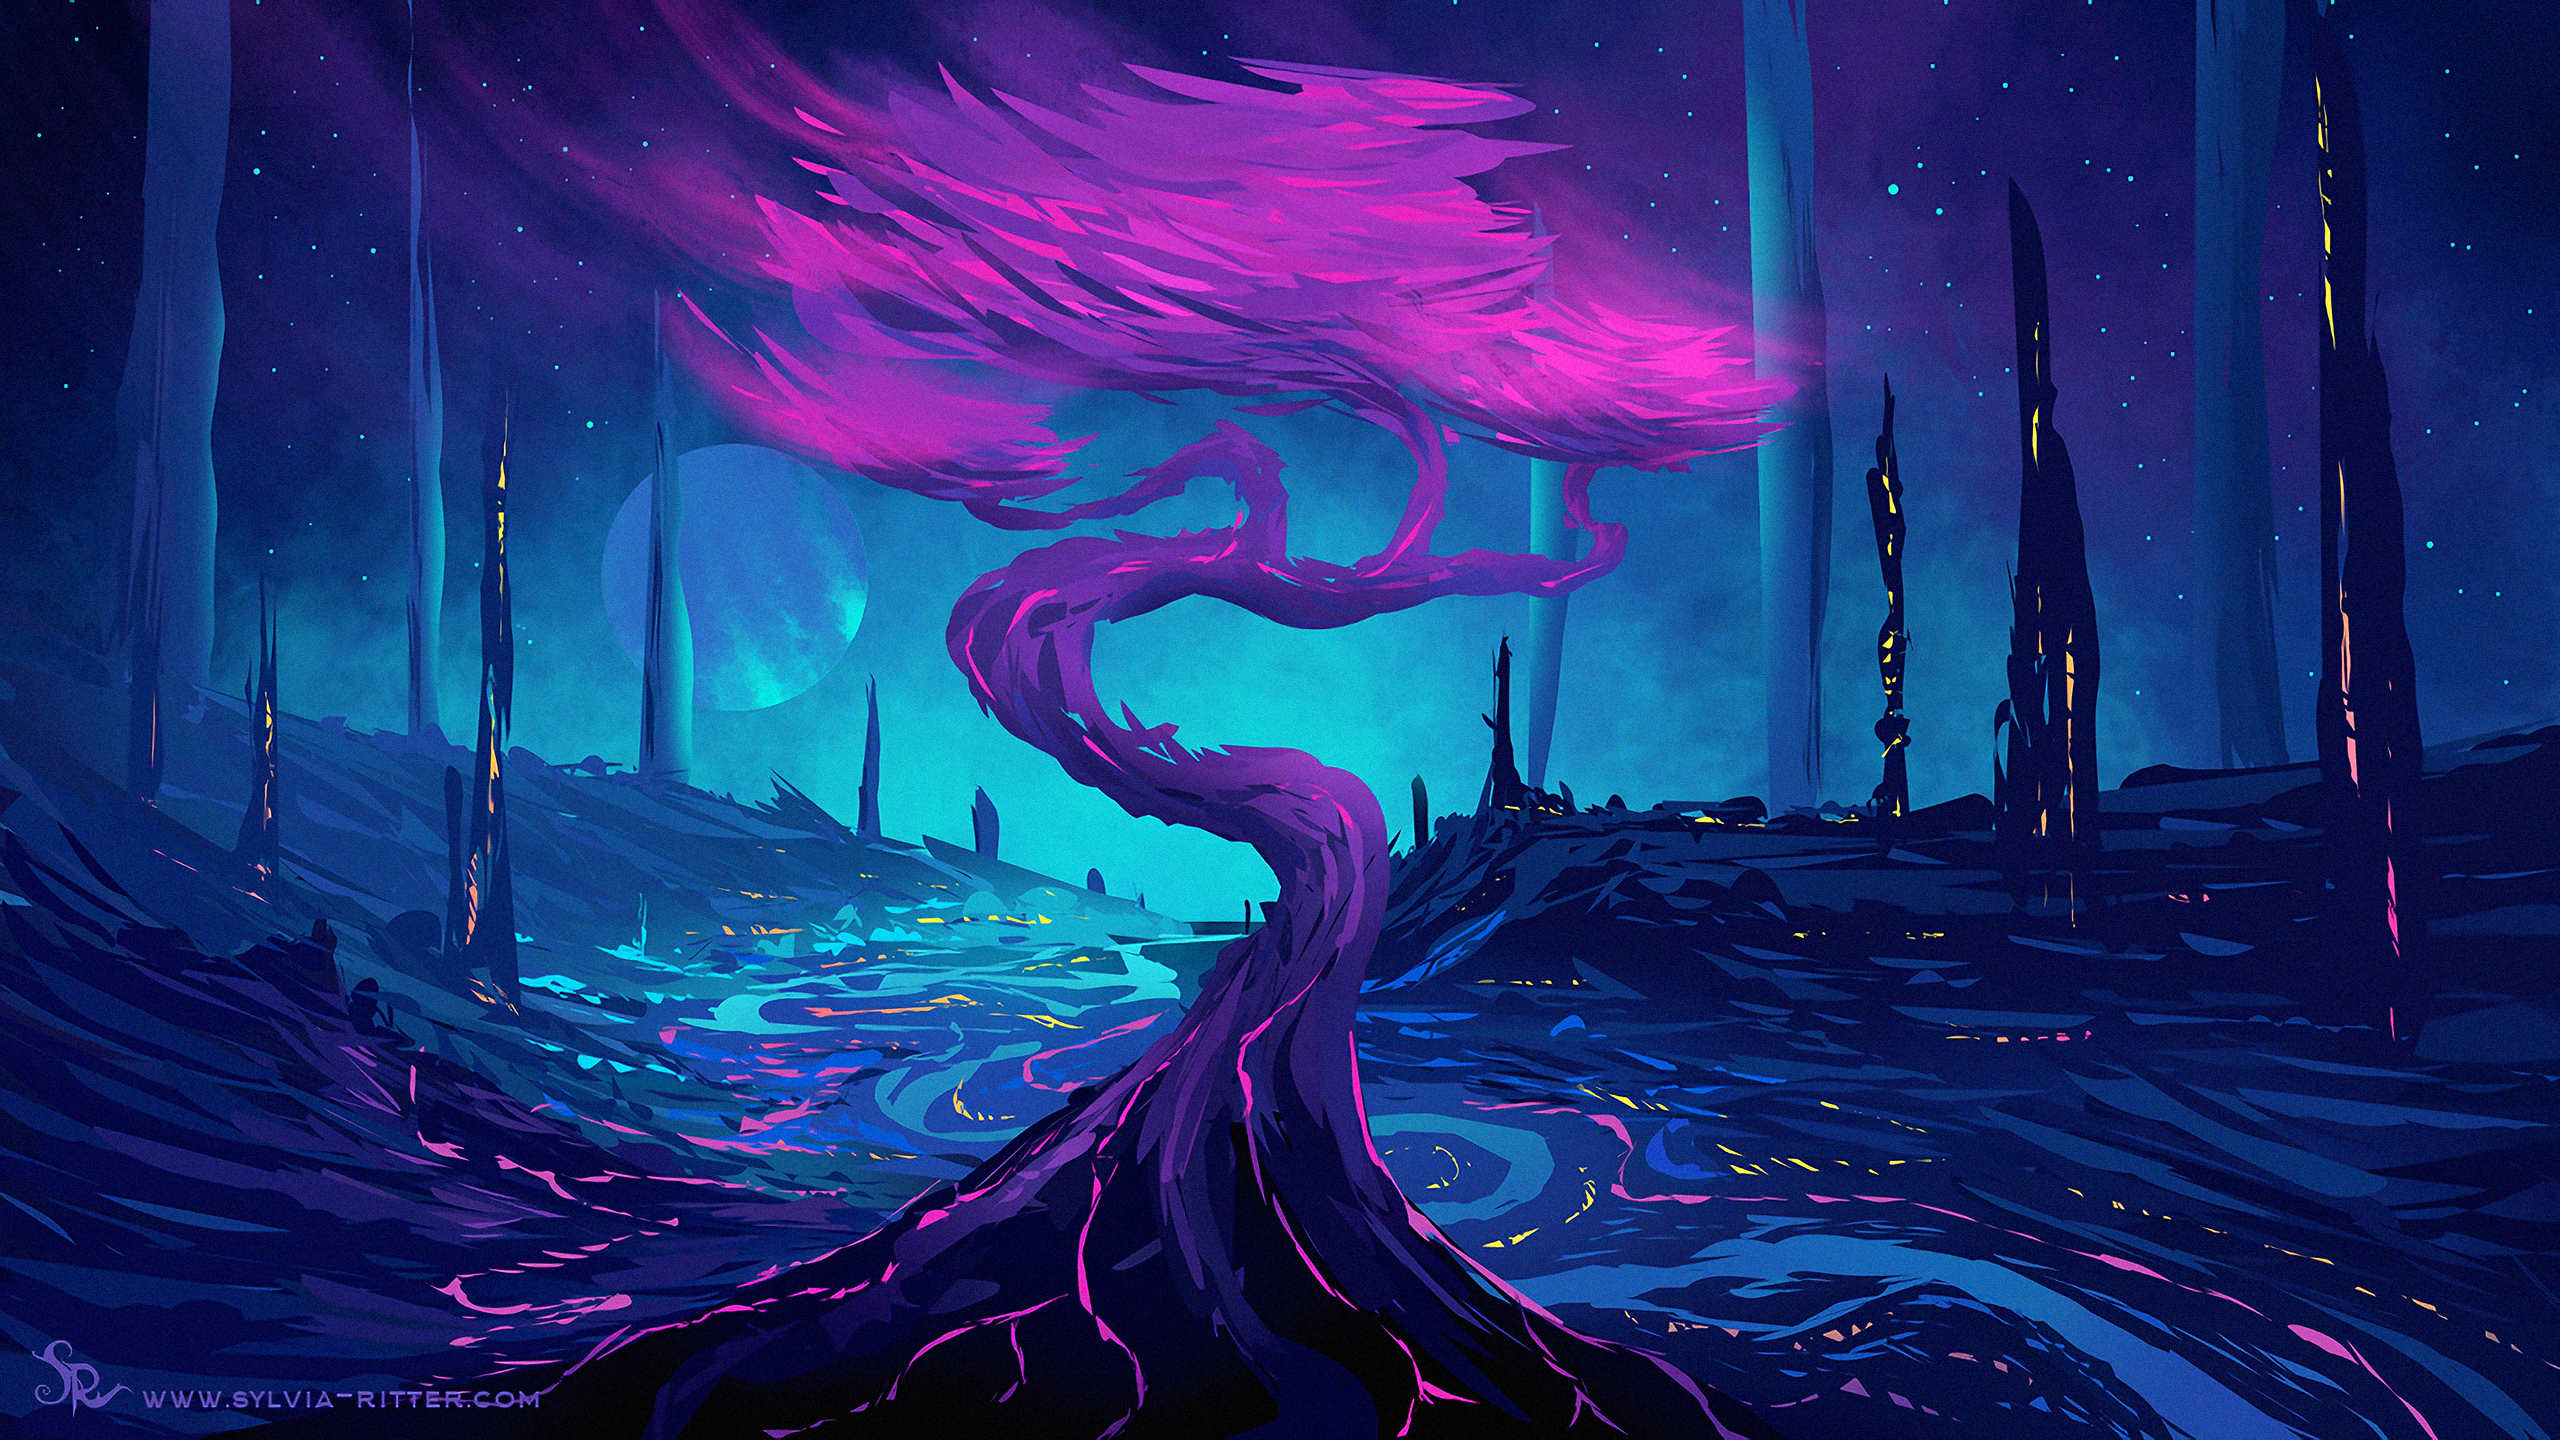 General 2560x1440 digital art artwork illustration drawing digital painting fantasy art trees planet purple blue pink space landscape nature aliens science fiction DeviantArt